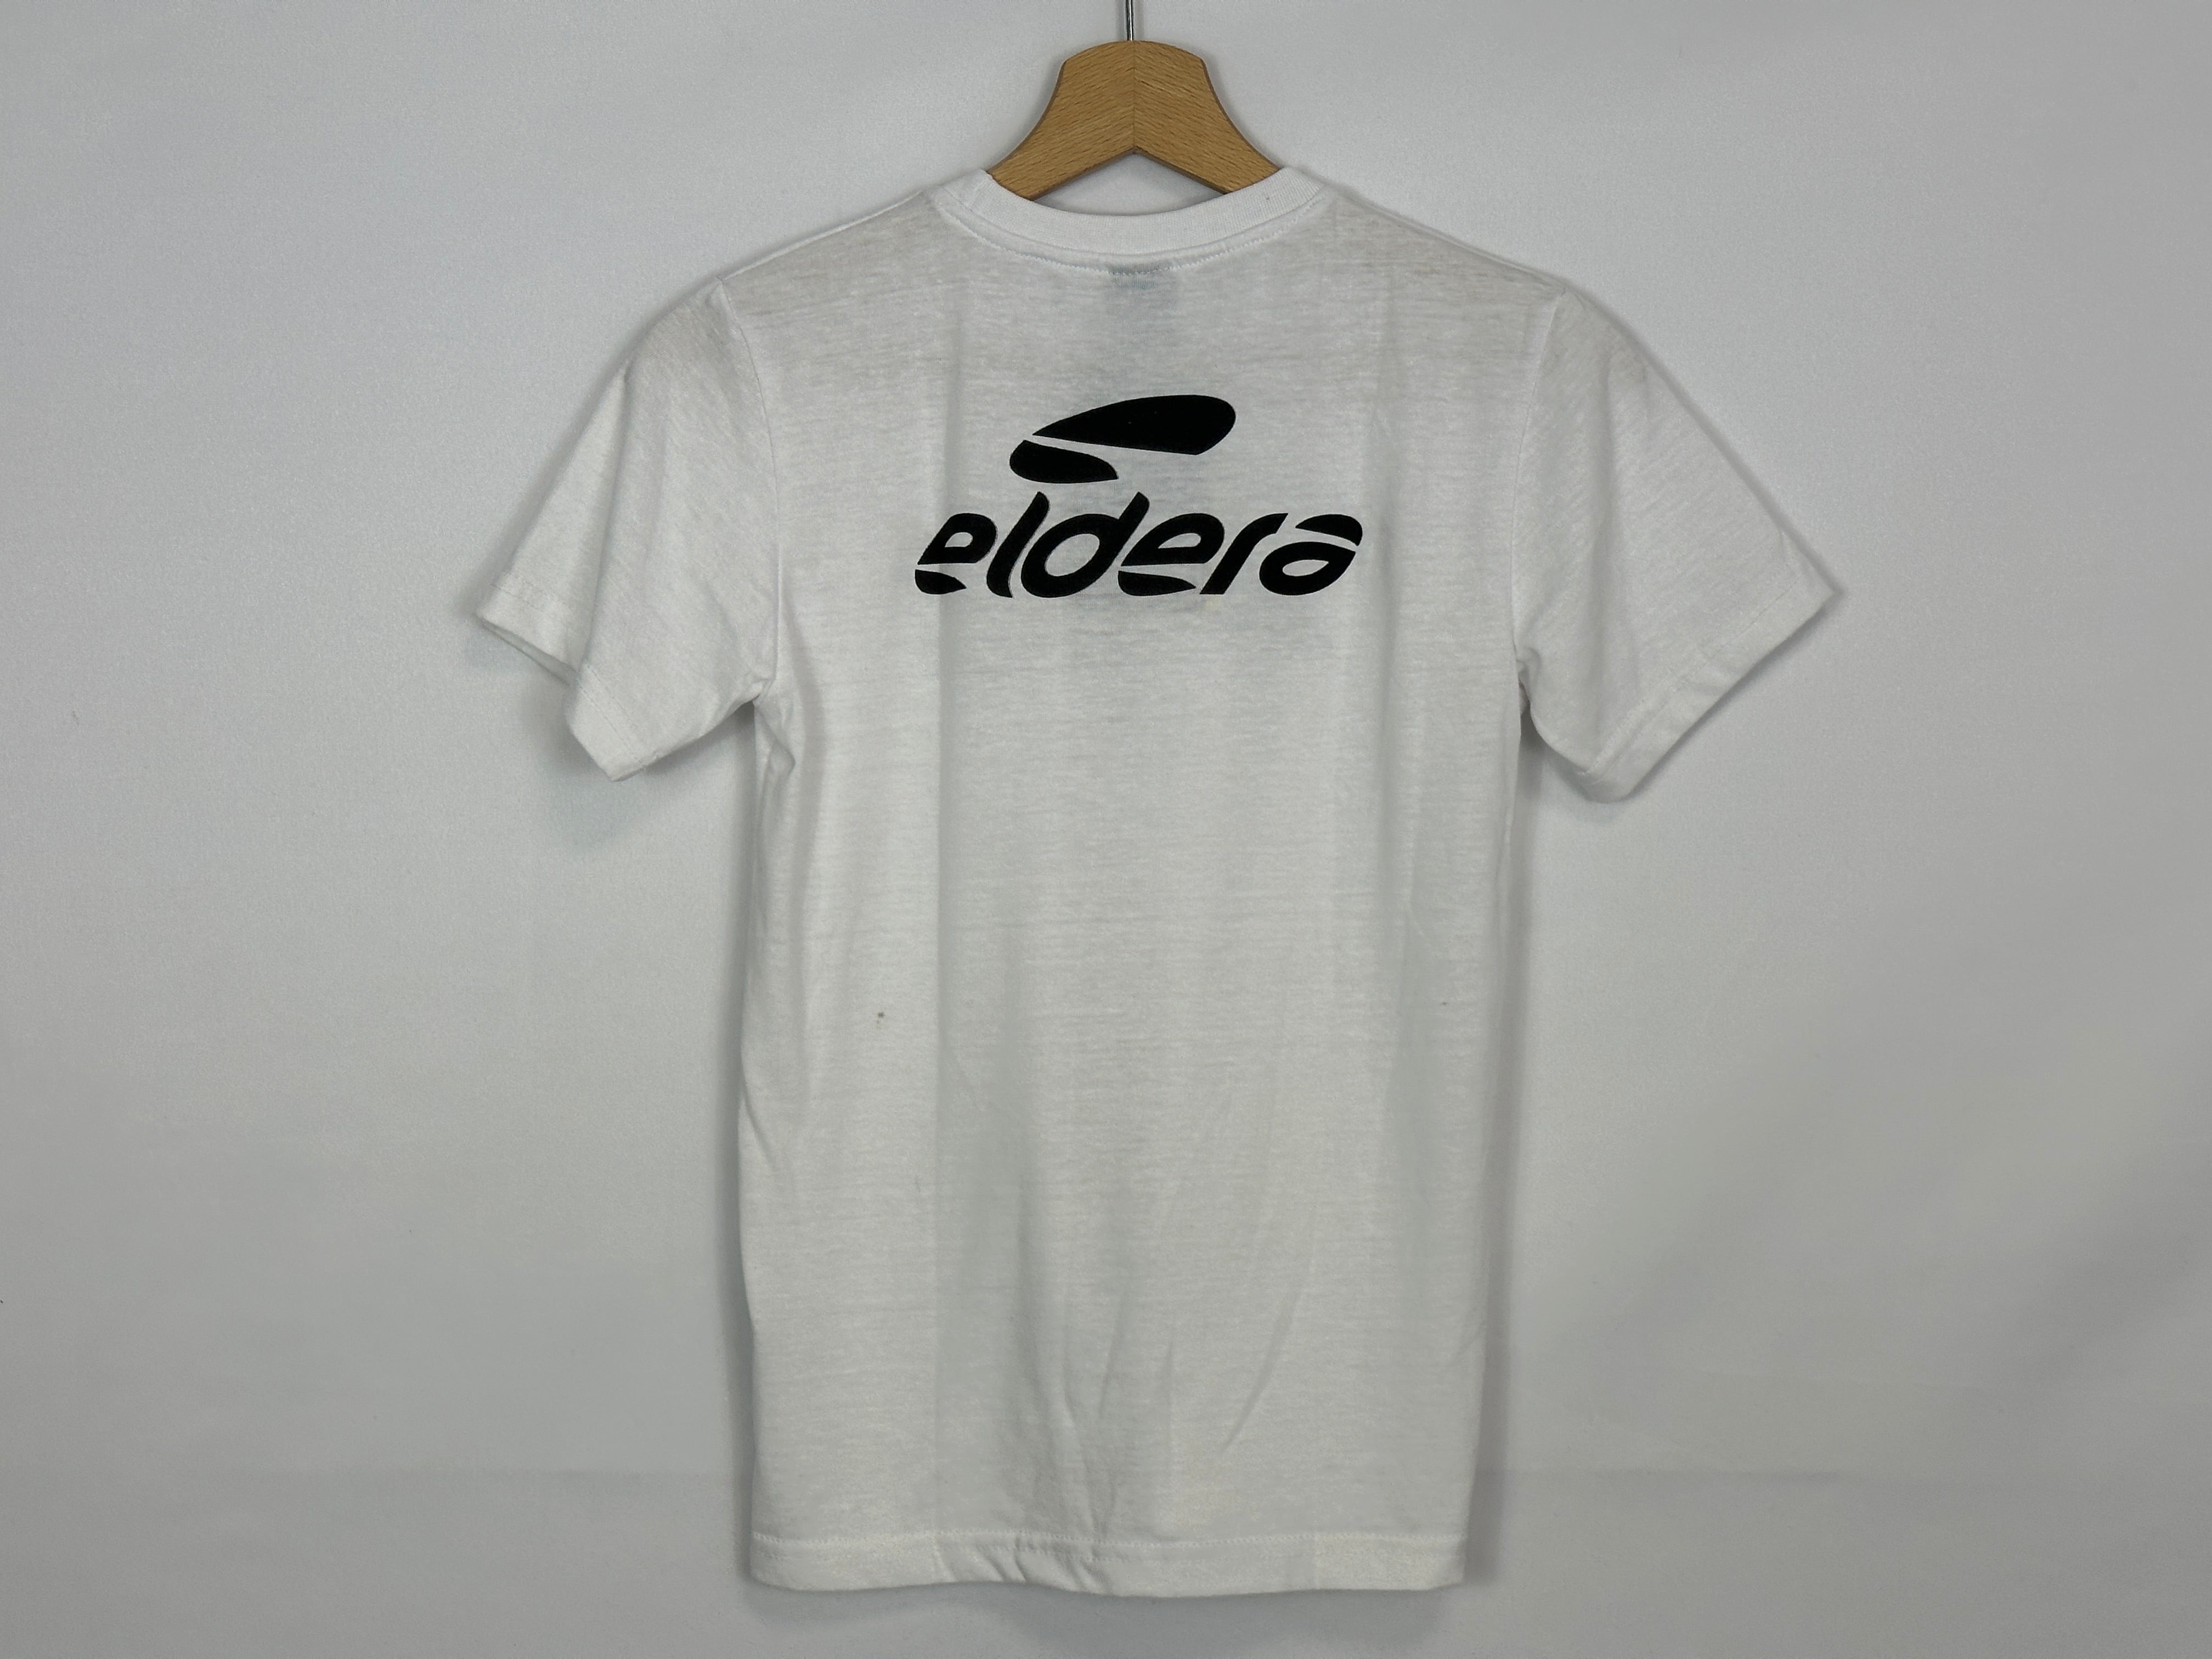 Ciclismo FDJ - T-Shirt by Eldera